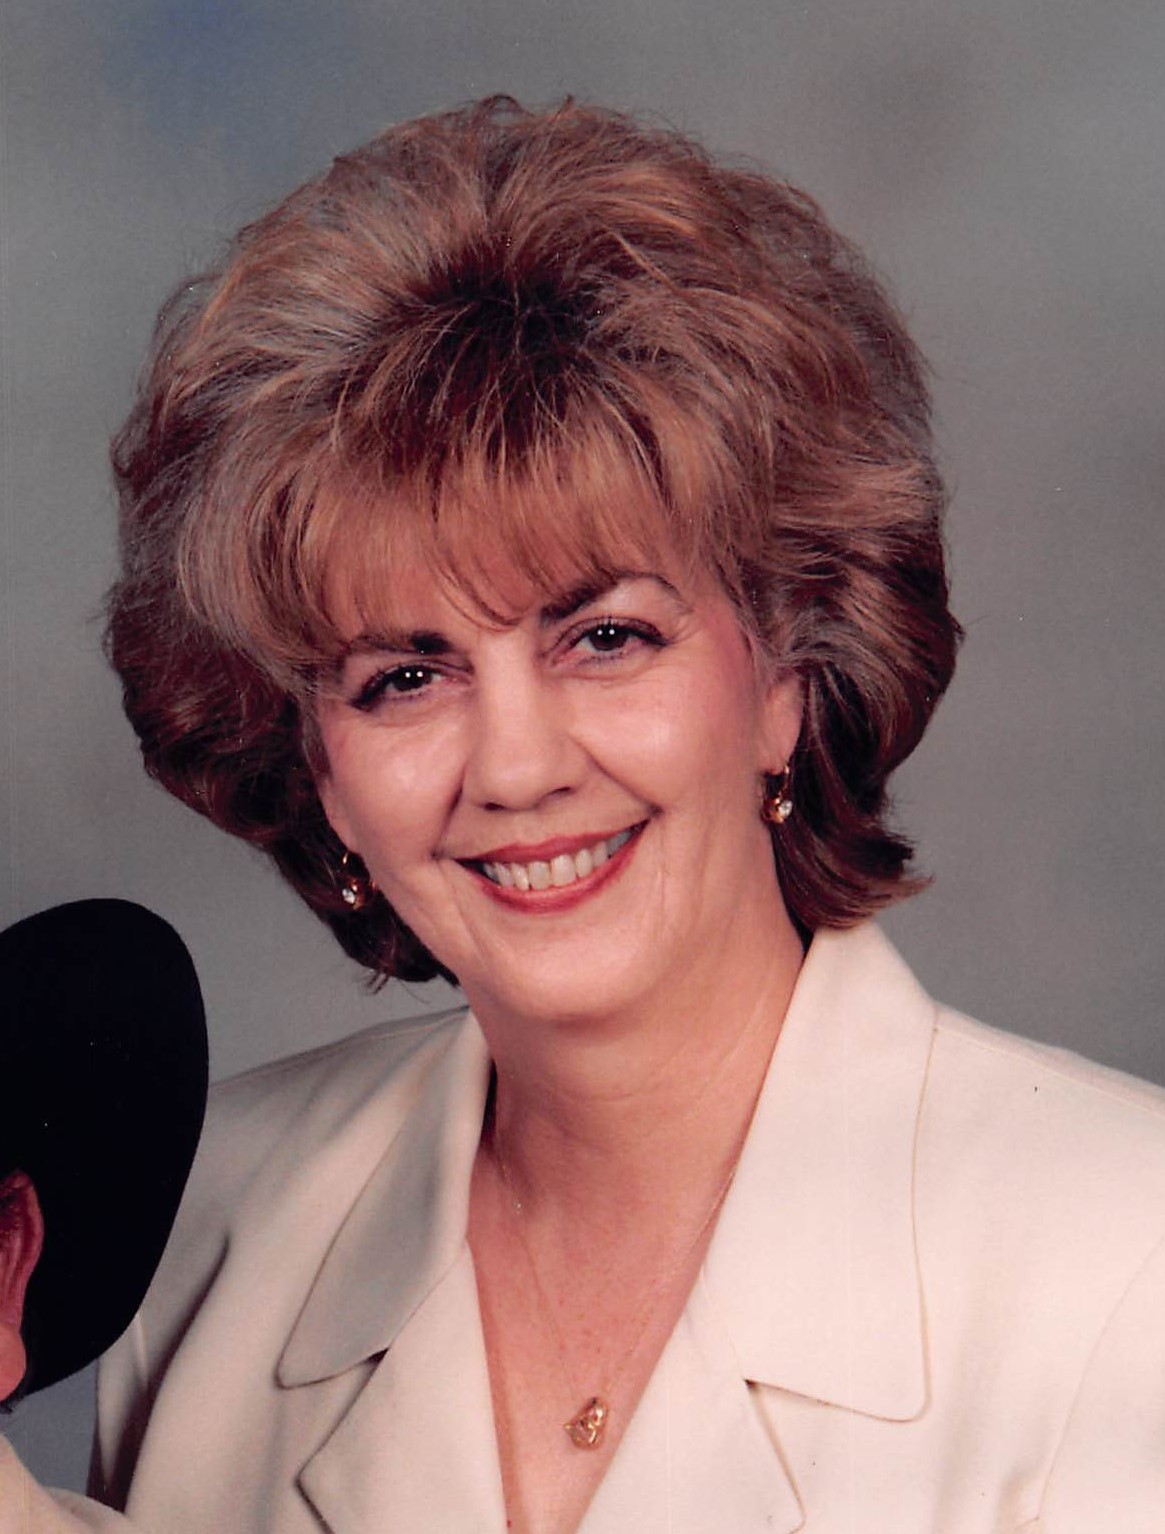 Obituary for Linda Davis